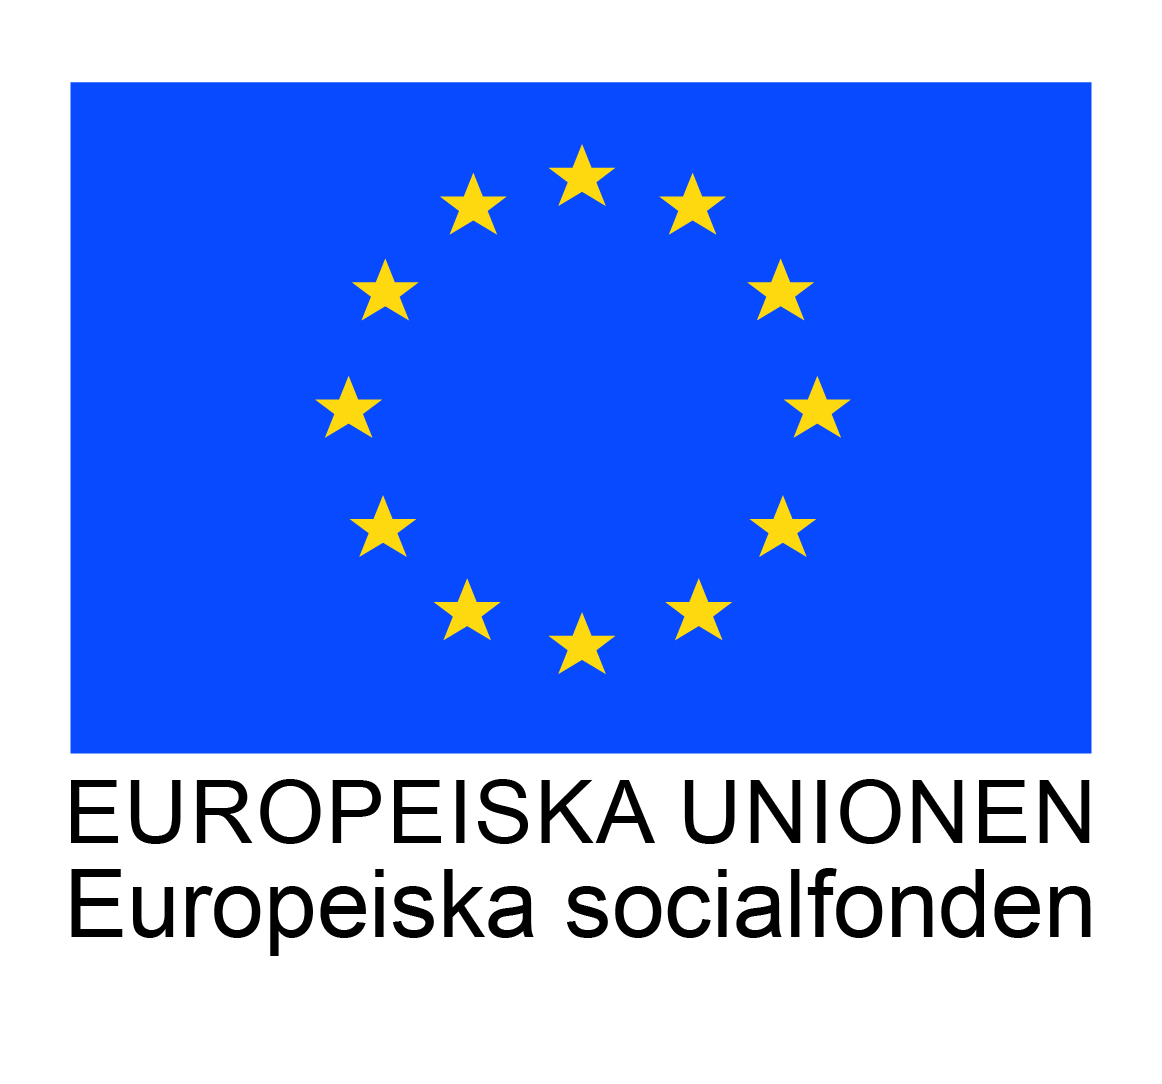 EU:s logotype.